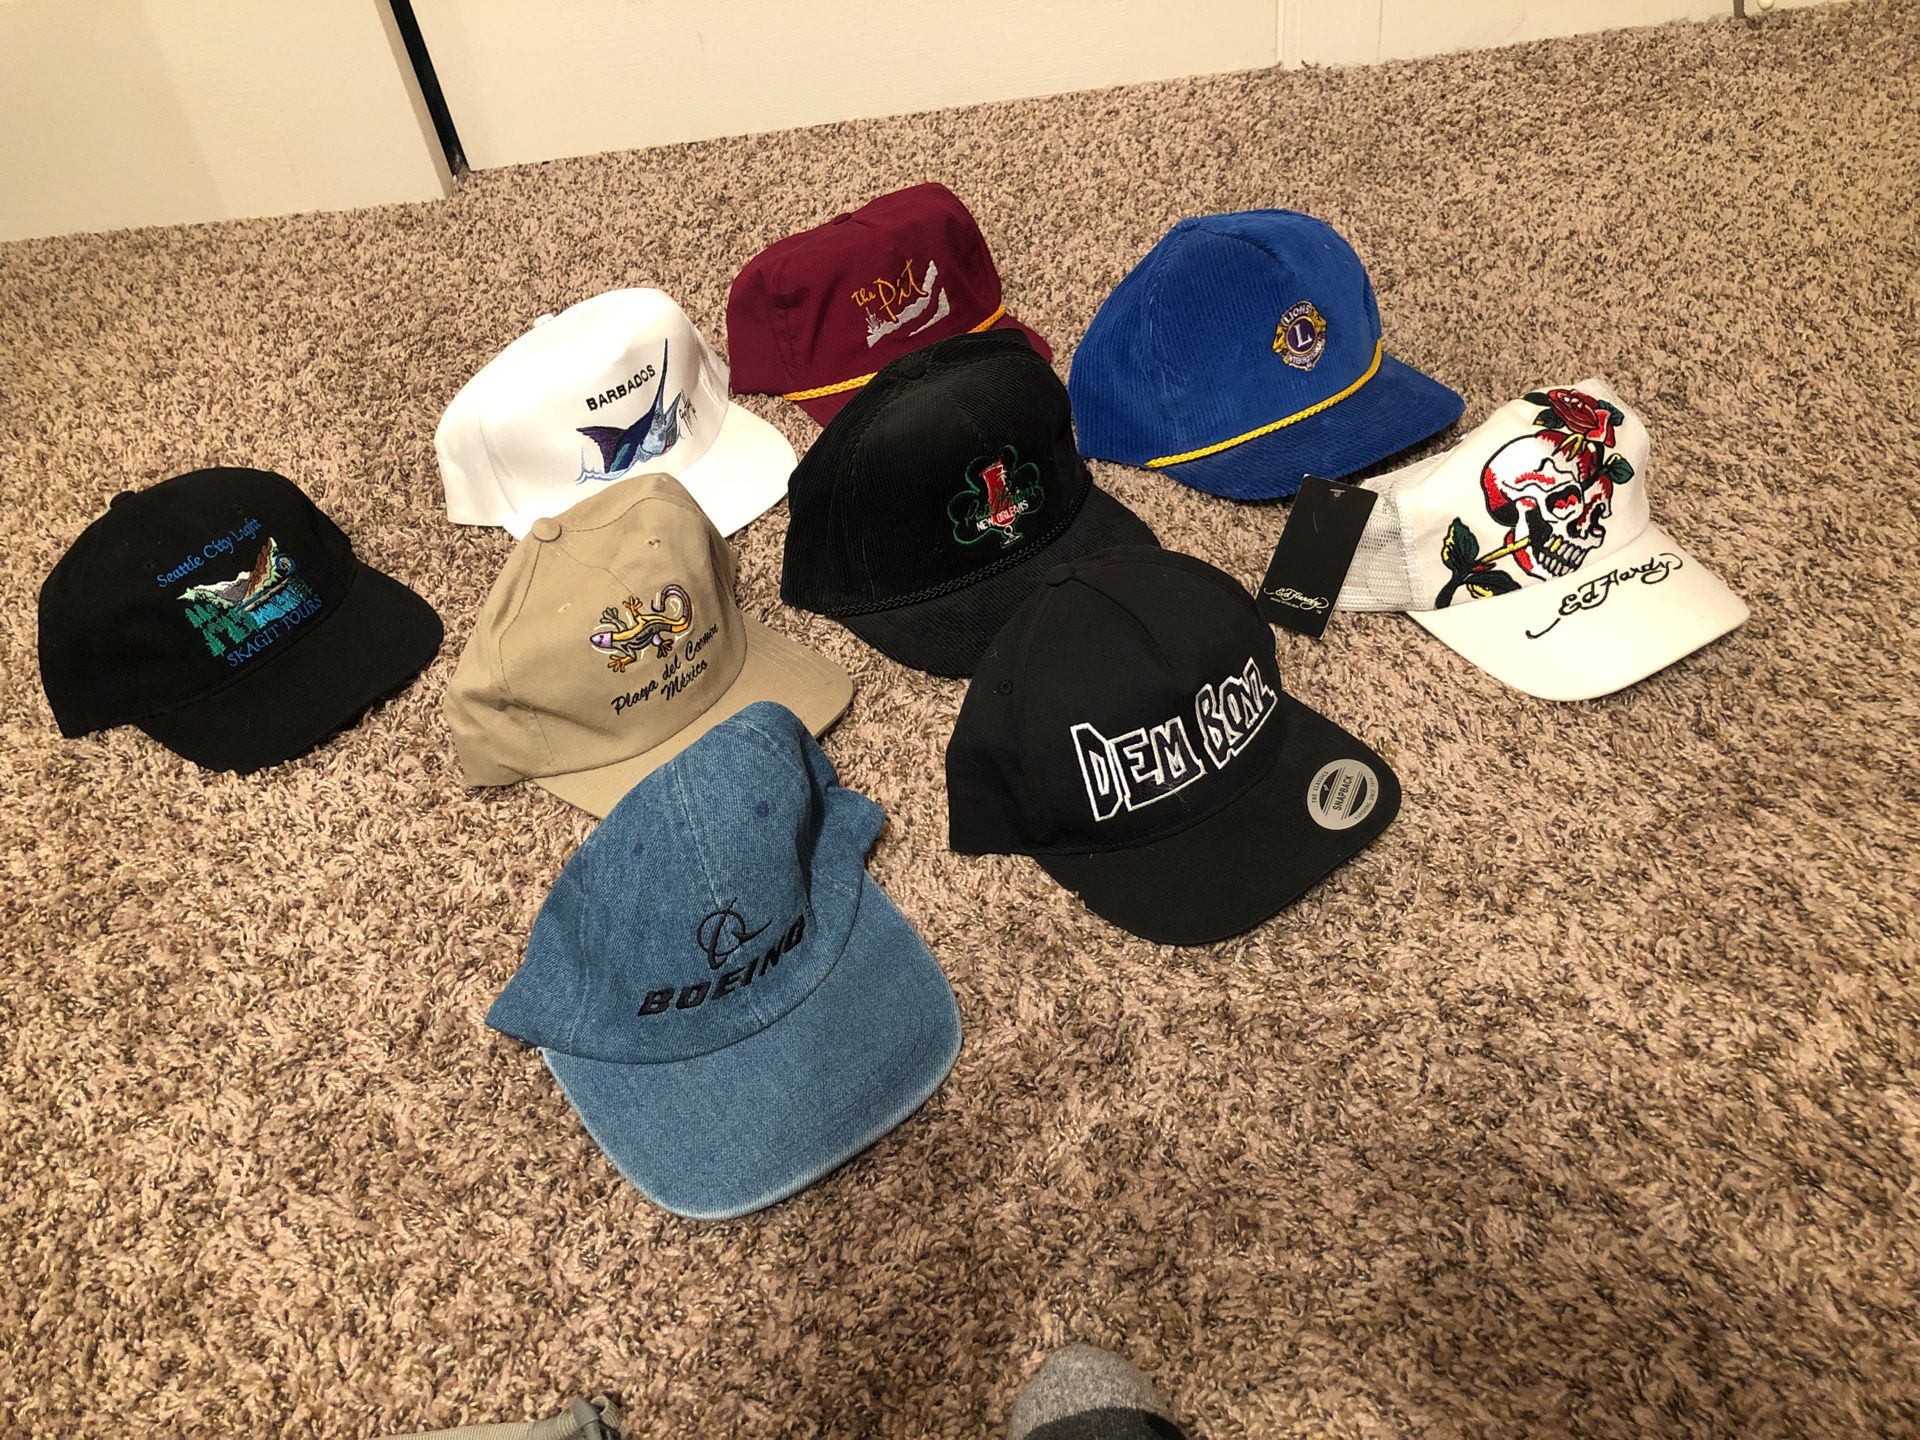 SnapBack/adjustable hats